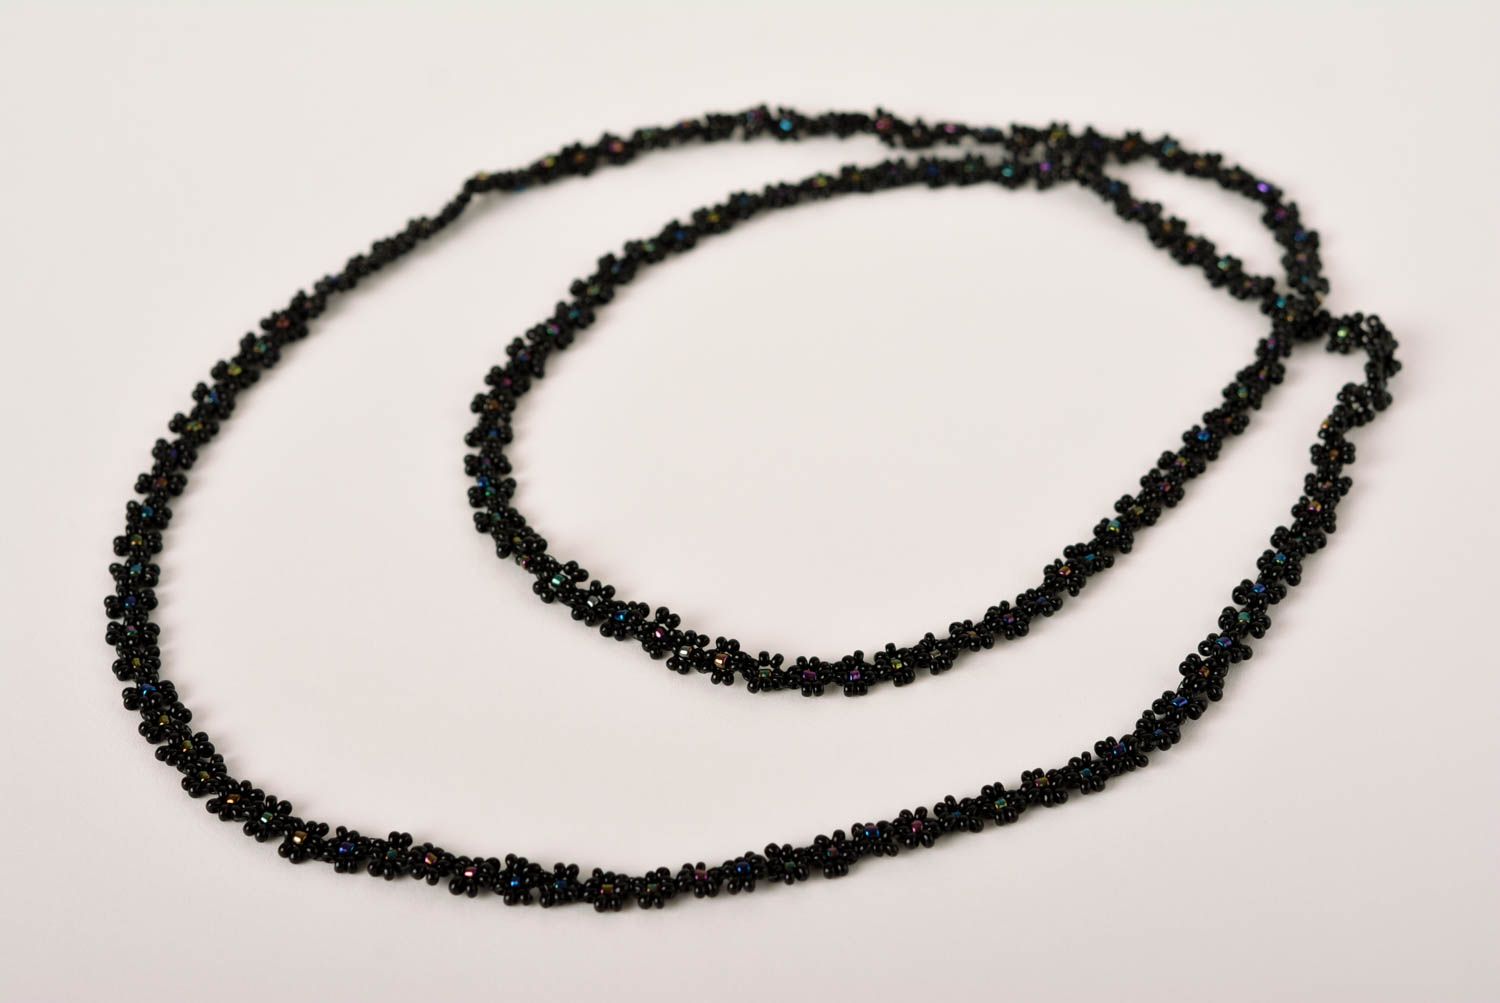 Stylish handmade beaded necklace fashion accessories artisan jewelry designs photo 1